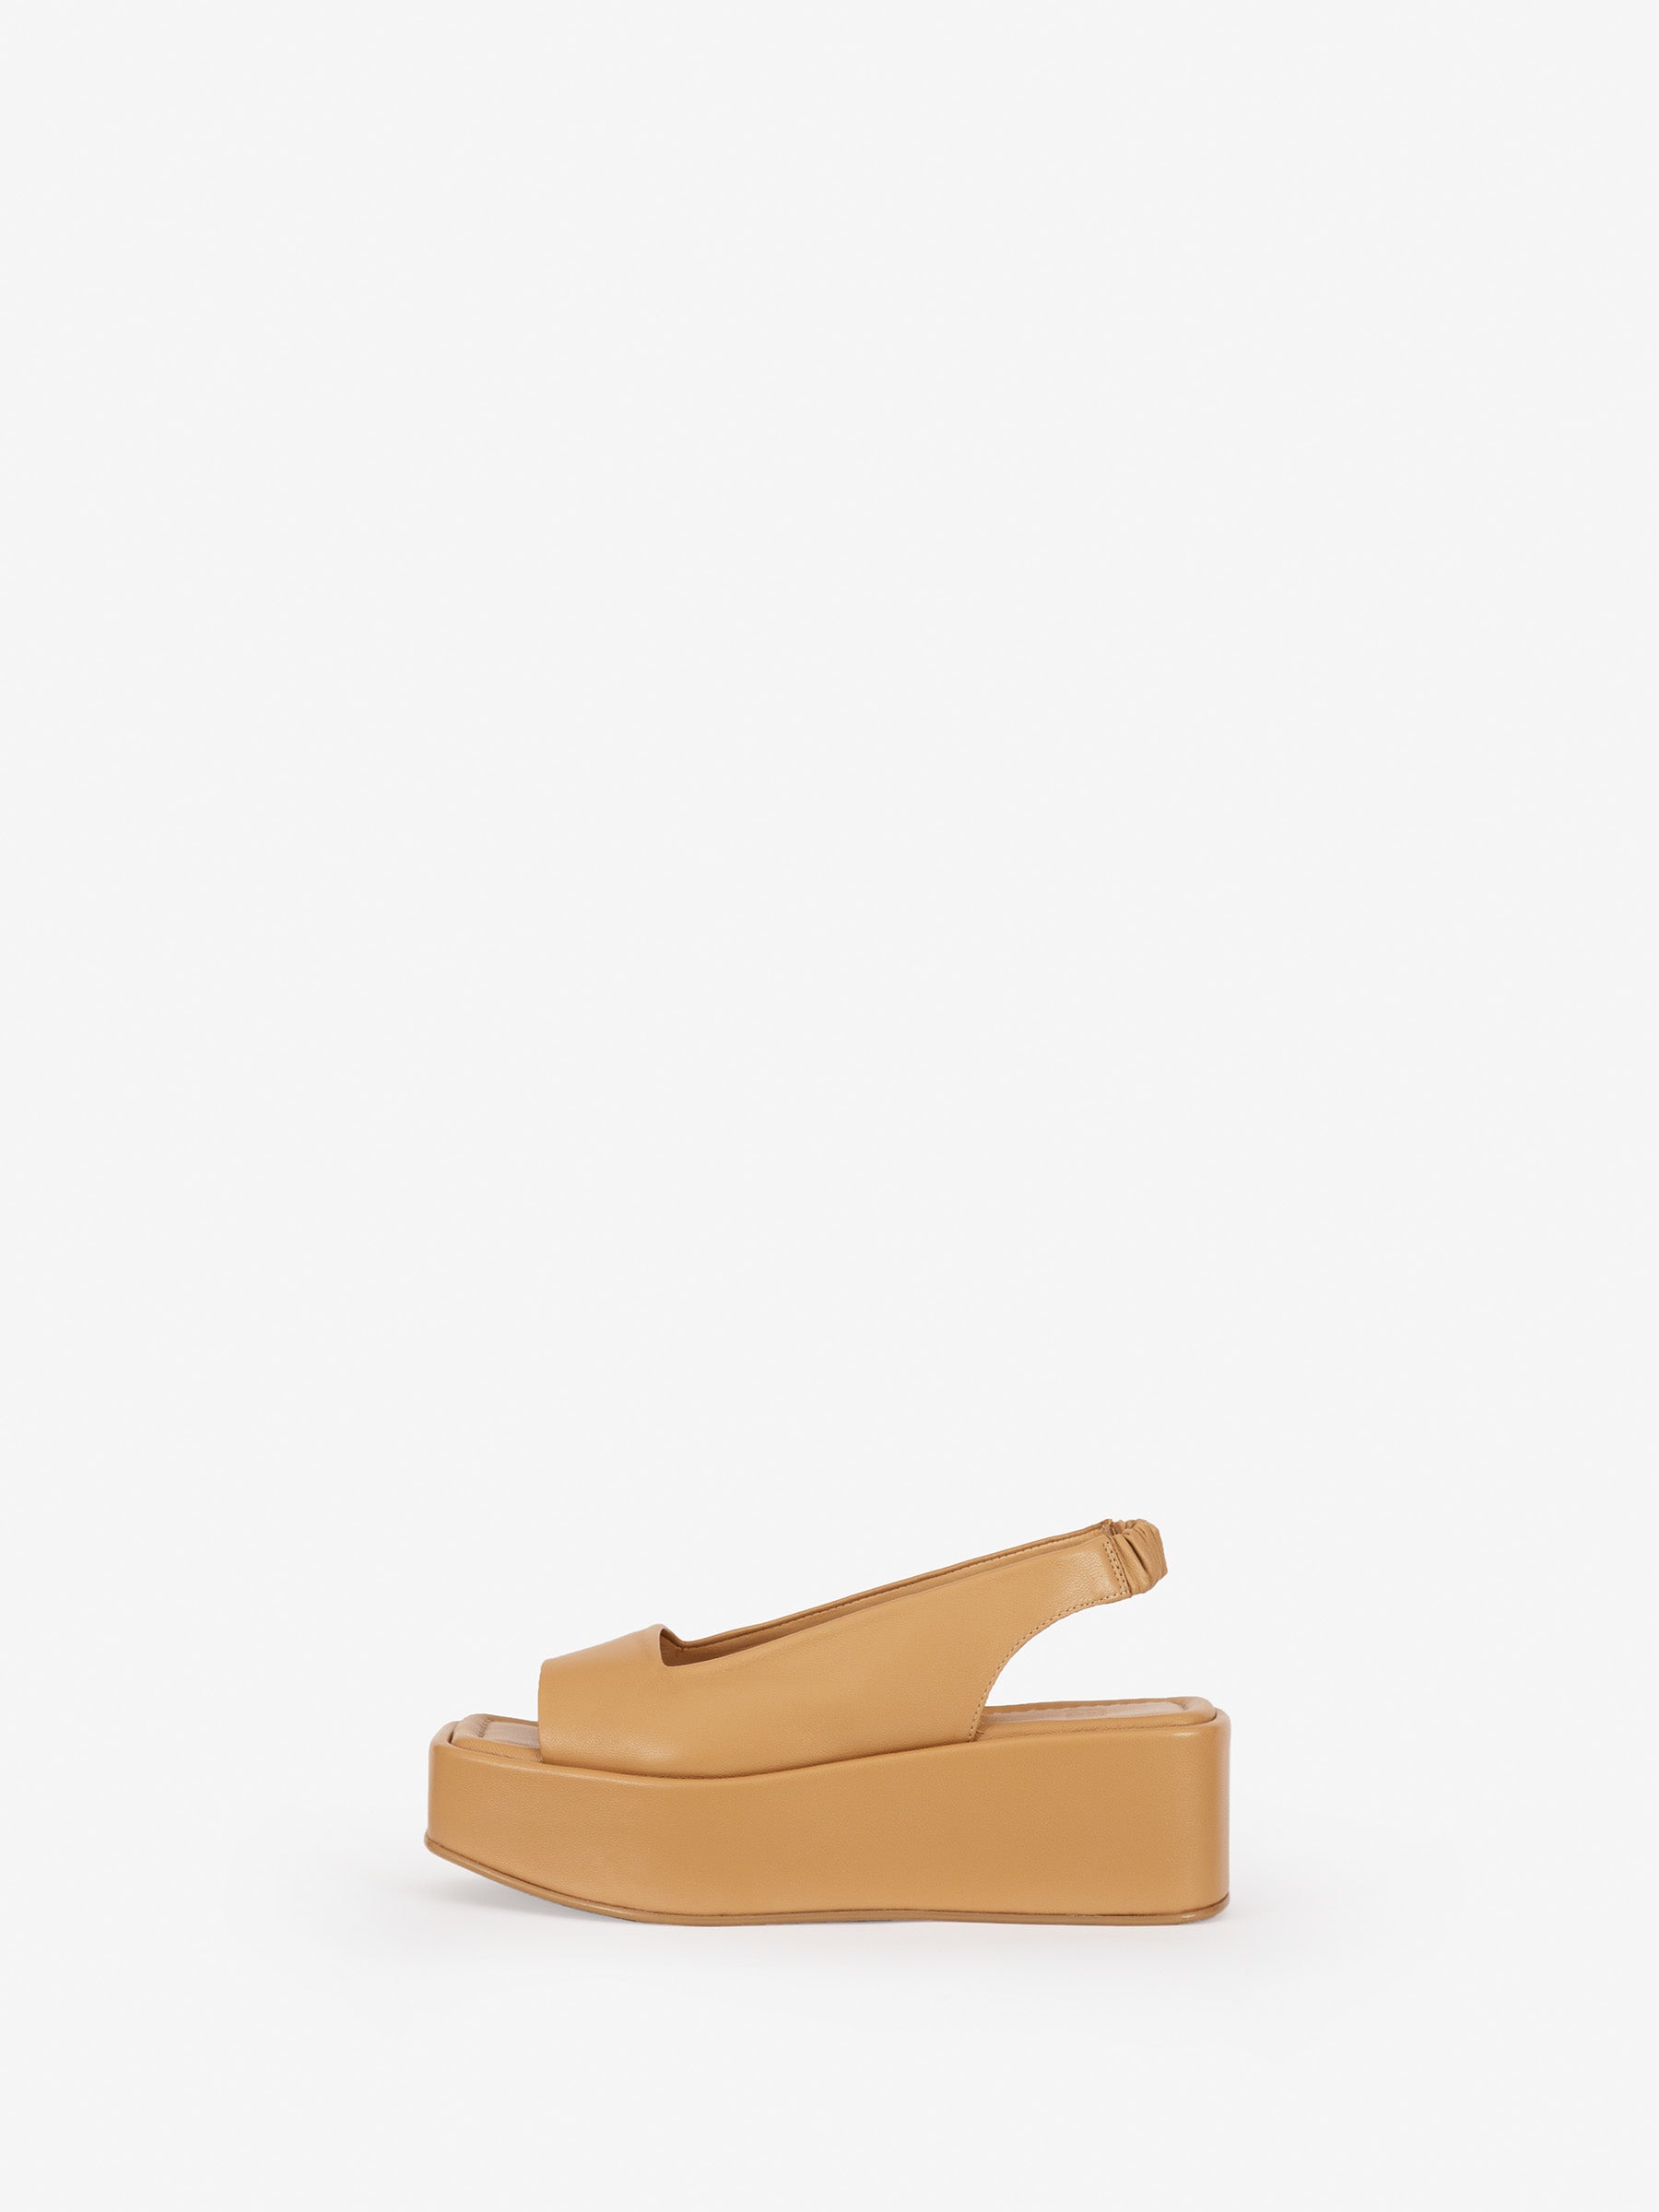 "Level up" - beige platform sandals from premium Swedish shoe brand ANNY NORD